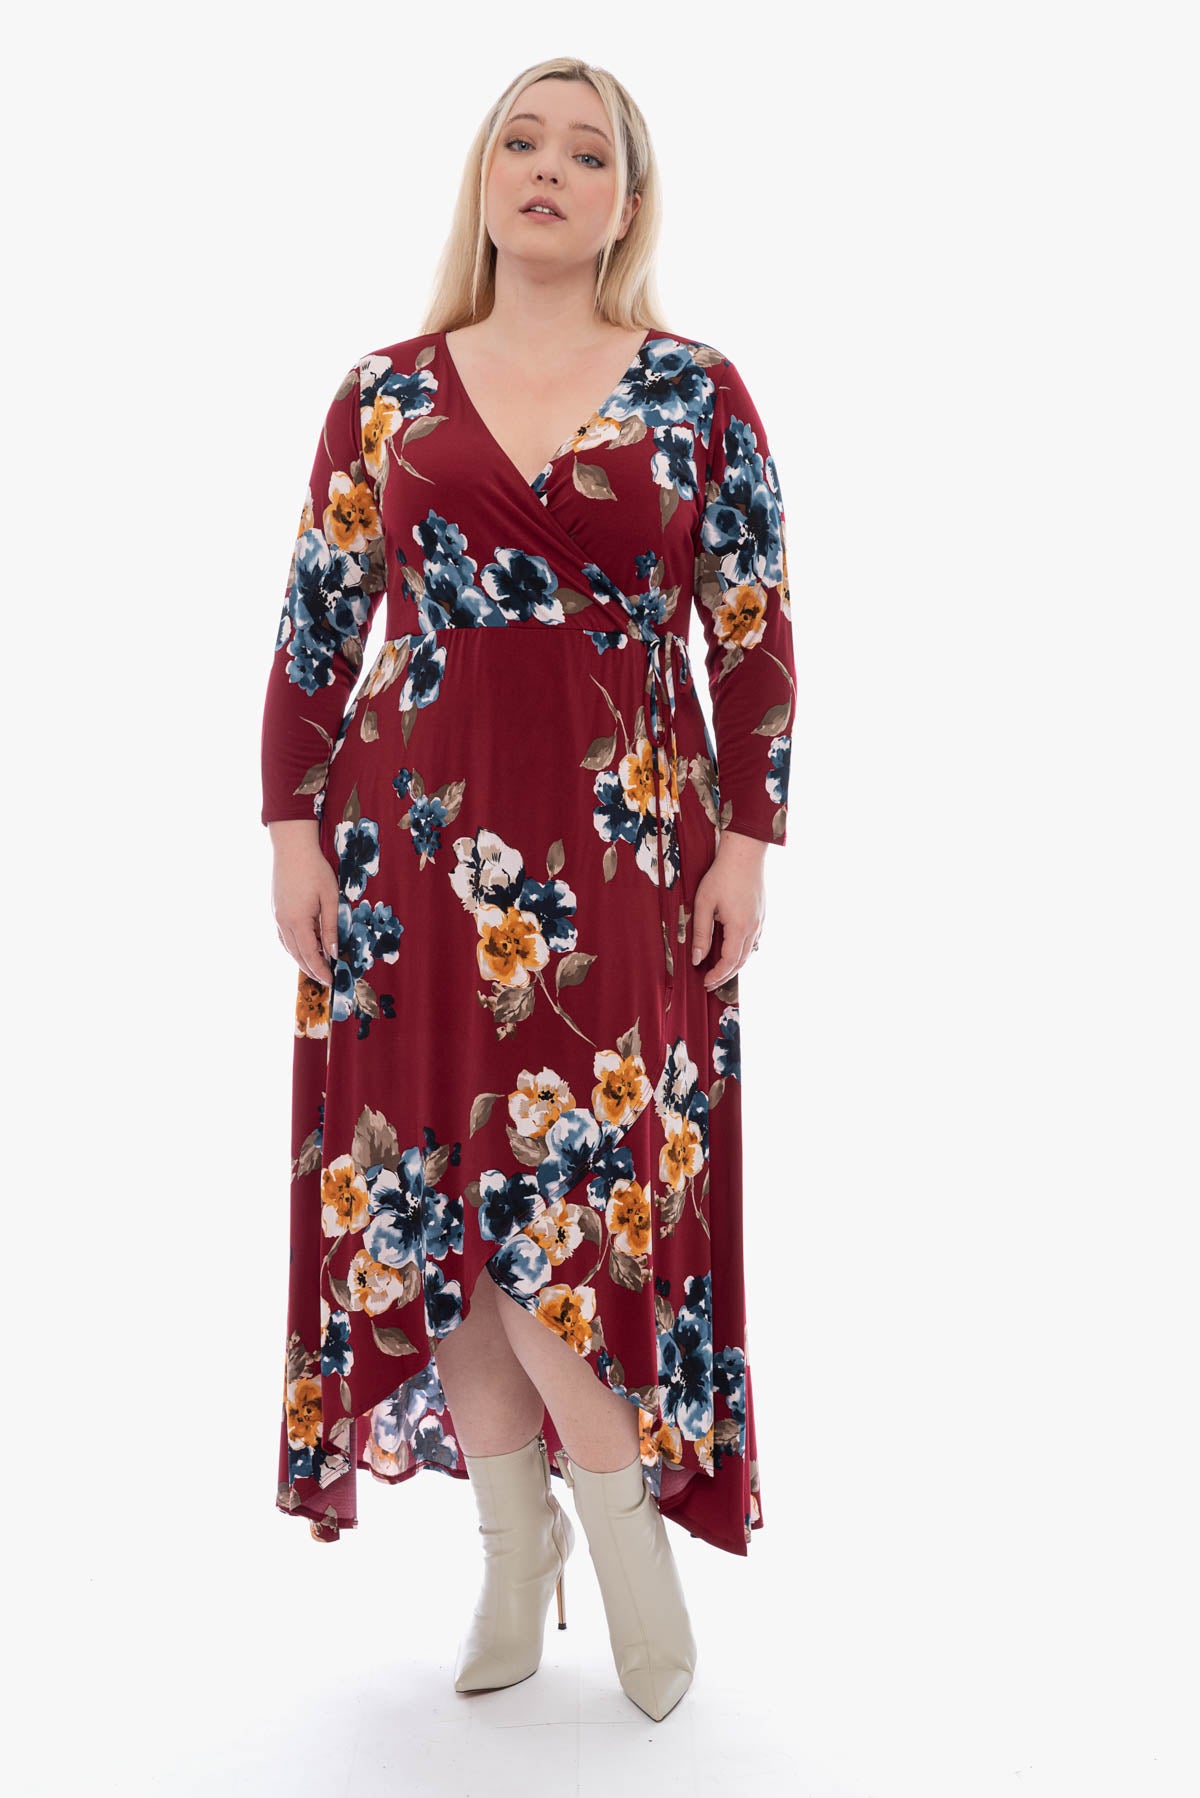 BERTHA burgundy flowered dress